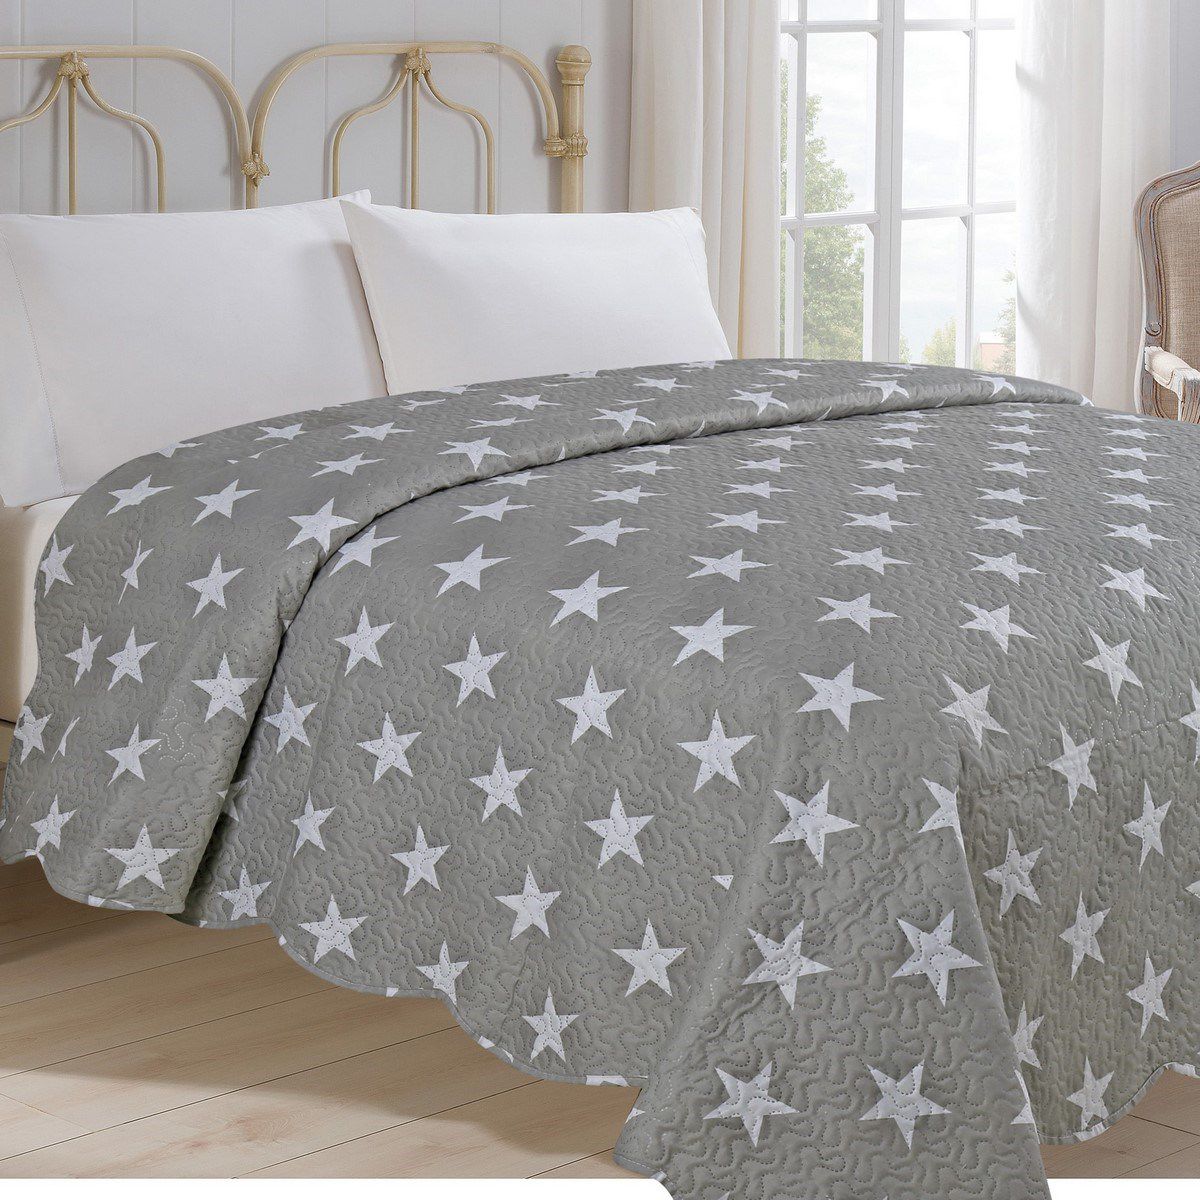 Jahu Přehoz  na postel Stars šedá, 220 x 240 cm\n - 4home.cz